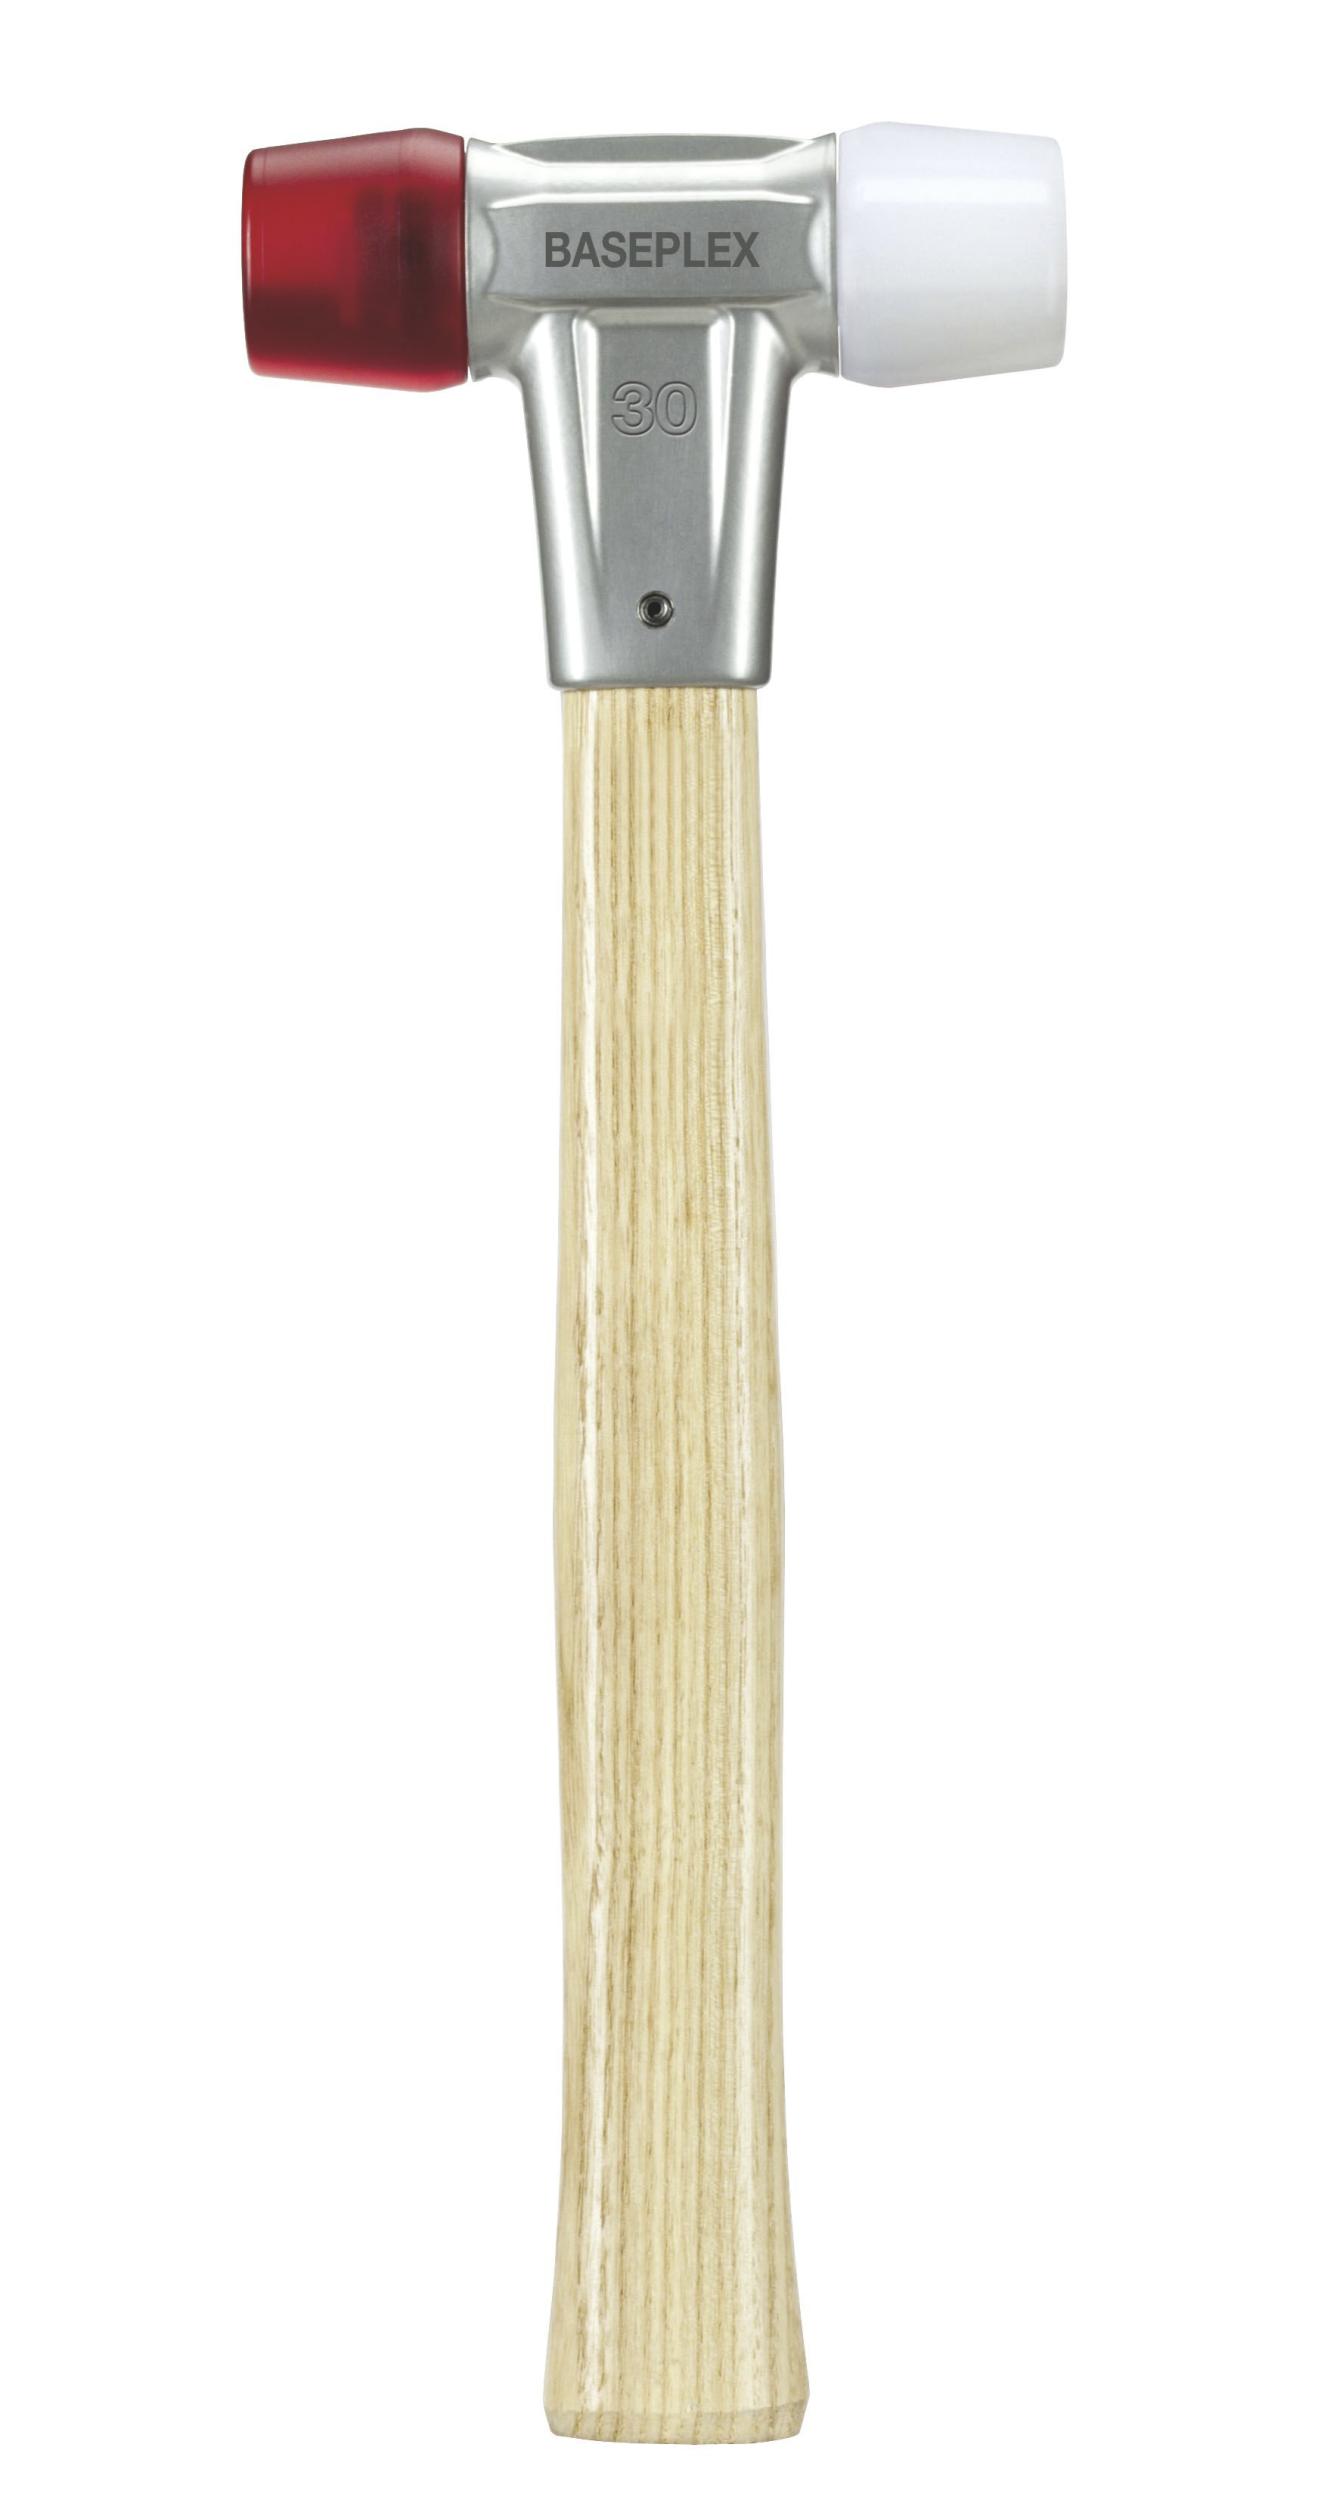 Halder Schonhammer 50 mm, ca. 950 g, Gesamtlänge 340 mm, Kopflänge 115 mm